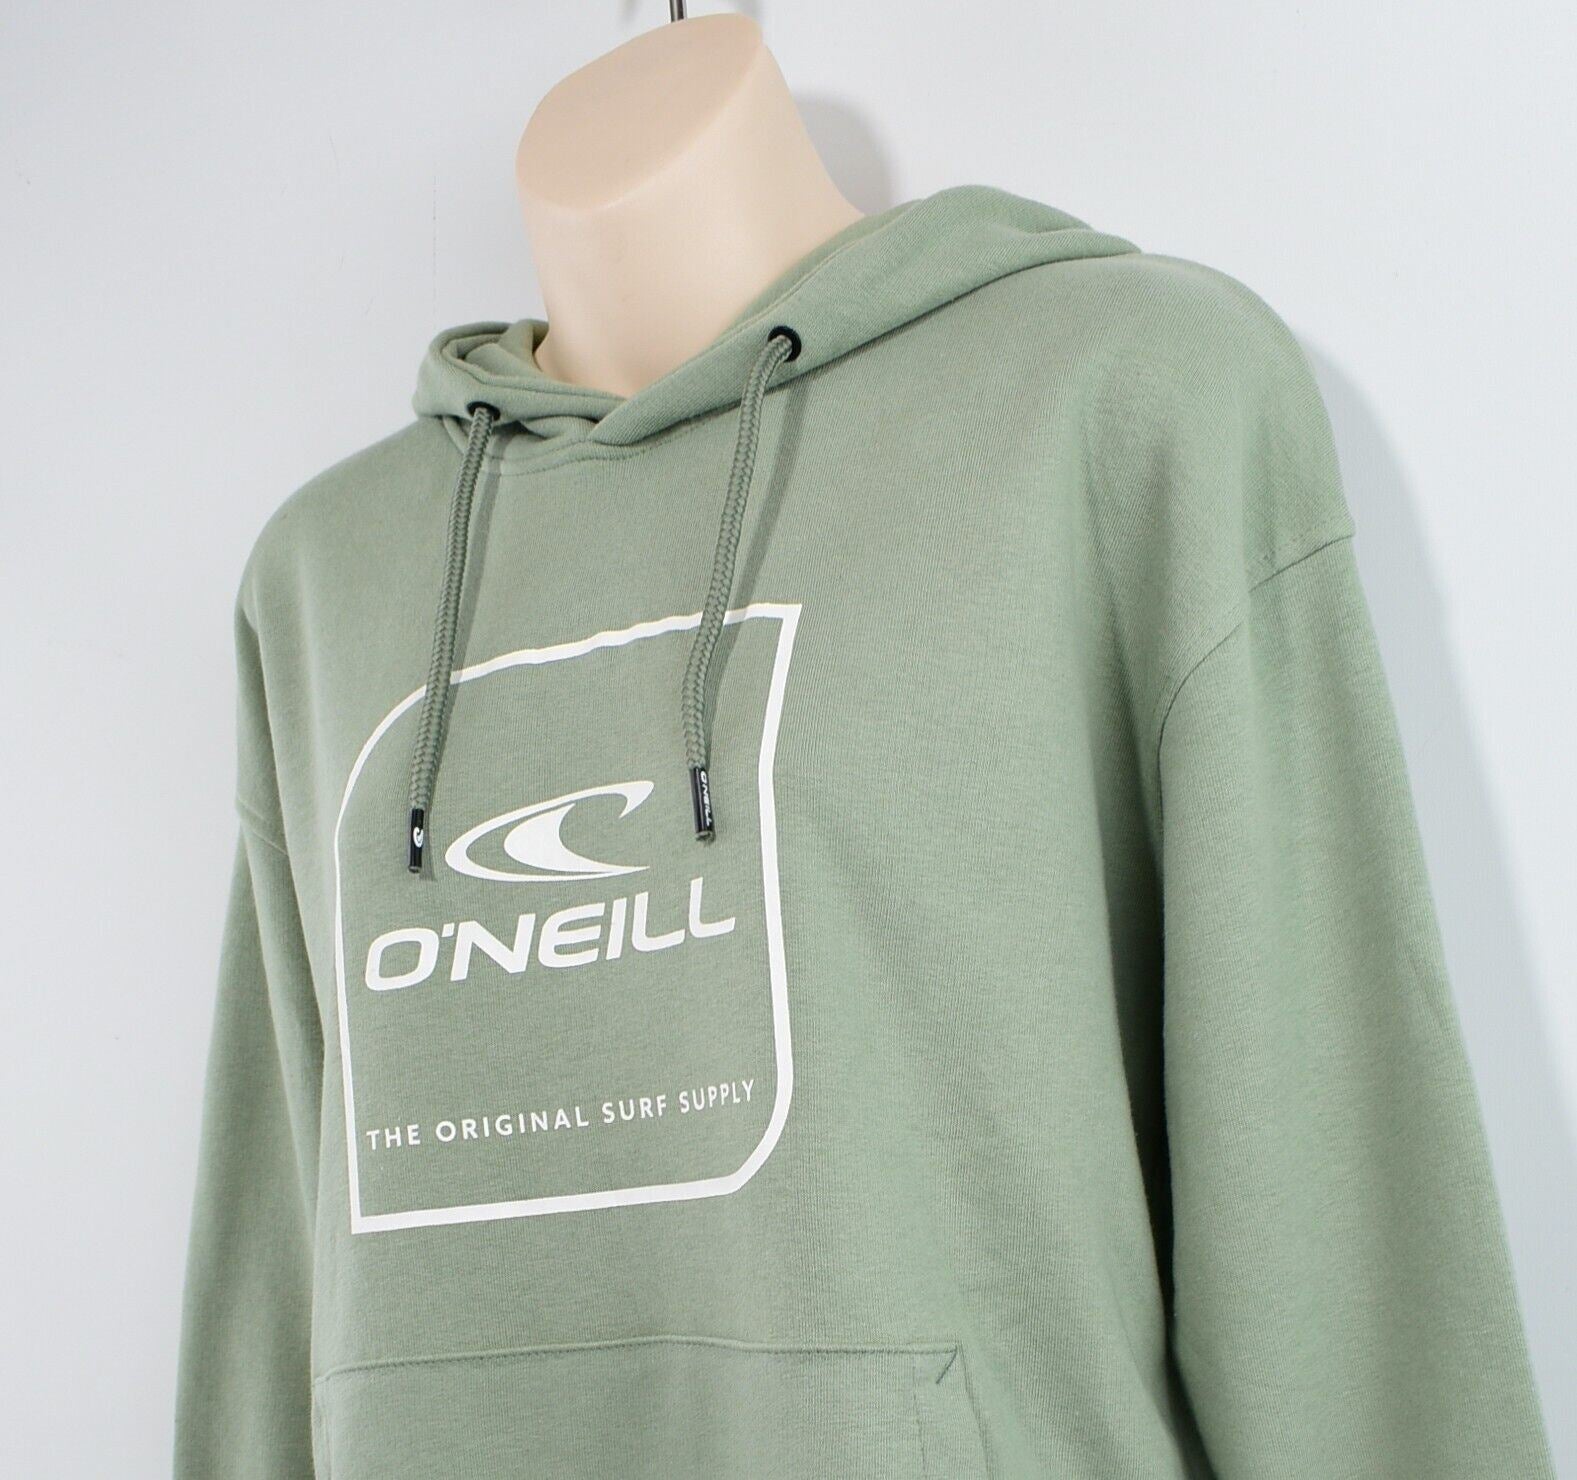 O'NEILL Women's CUBE Hoodie, Hooded Sweatshirt, Green (Lily Pad), size XL /UK 16